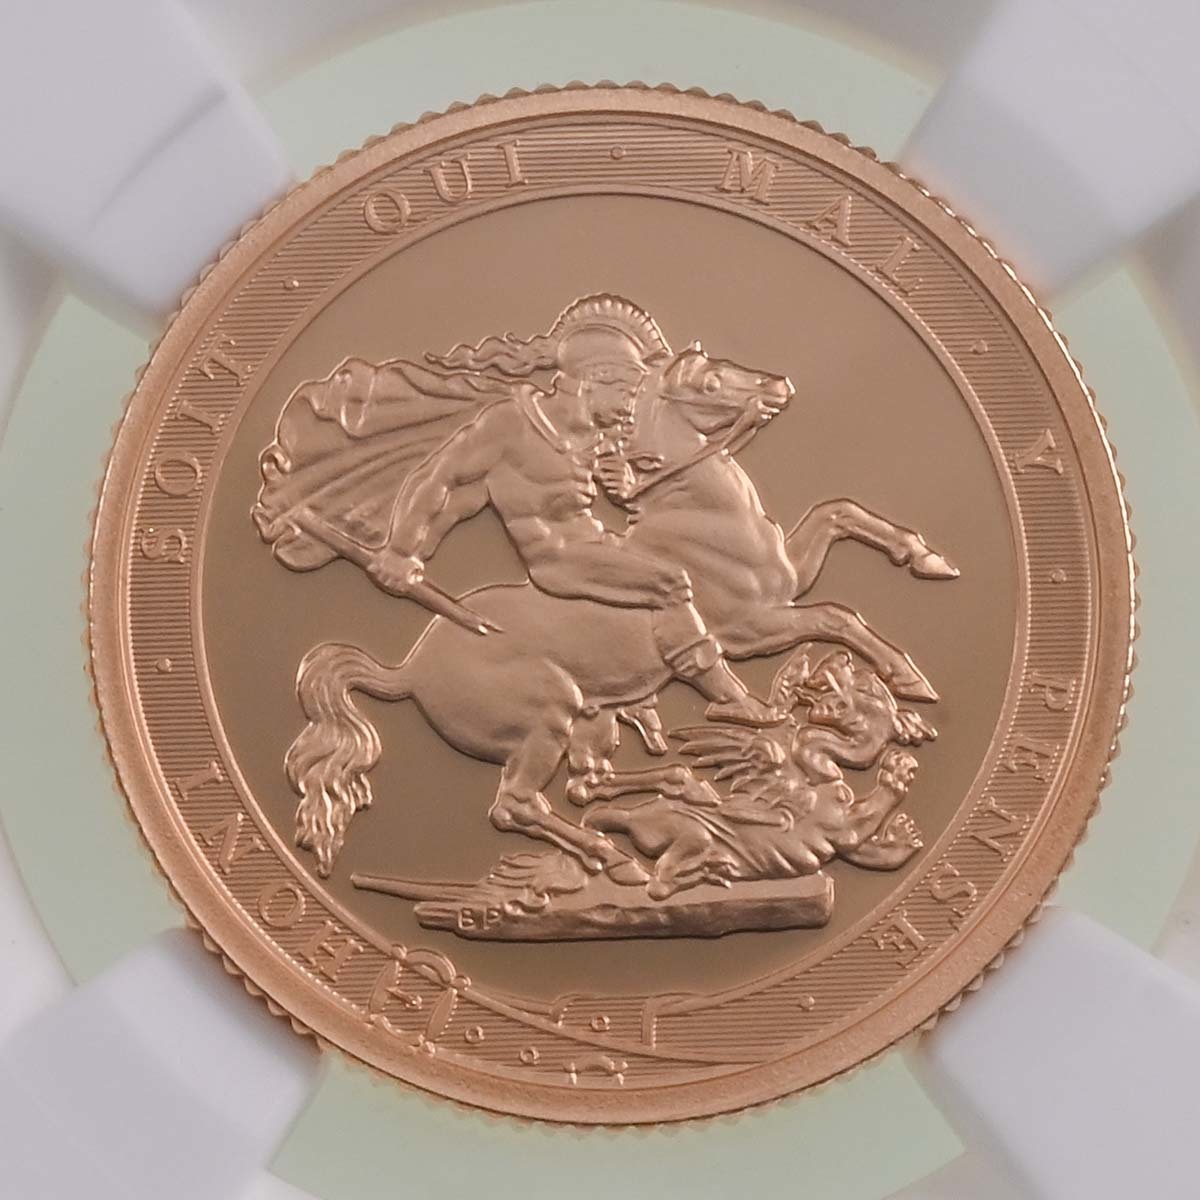 SV17PFA 2017 Elizabeth II Piedfort Gold Proof Sovereign 200th Anniversary Coin NGC Graded PF 70 Ultra Cameo Reverse